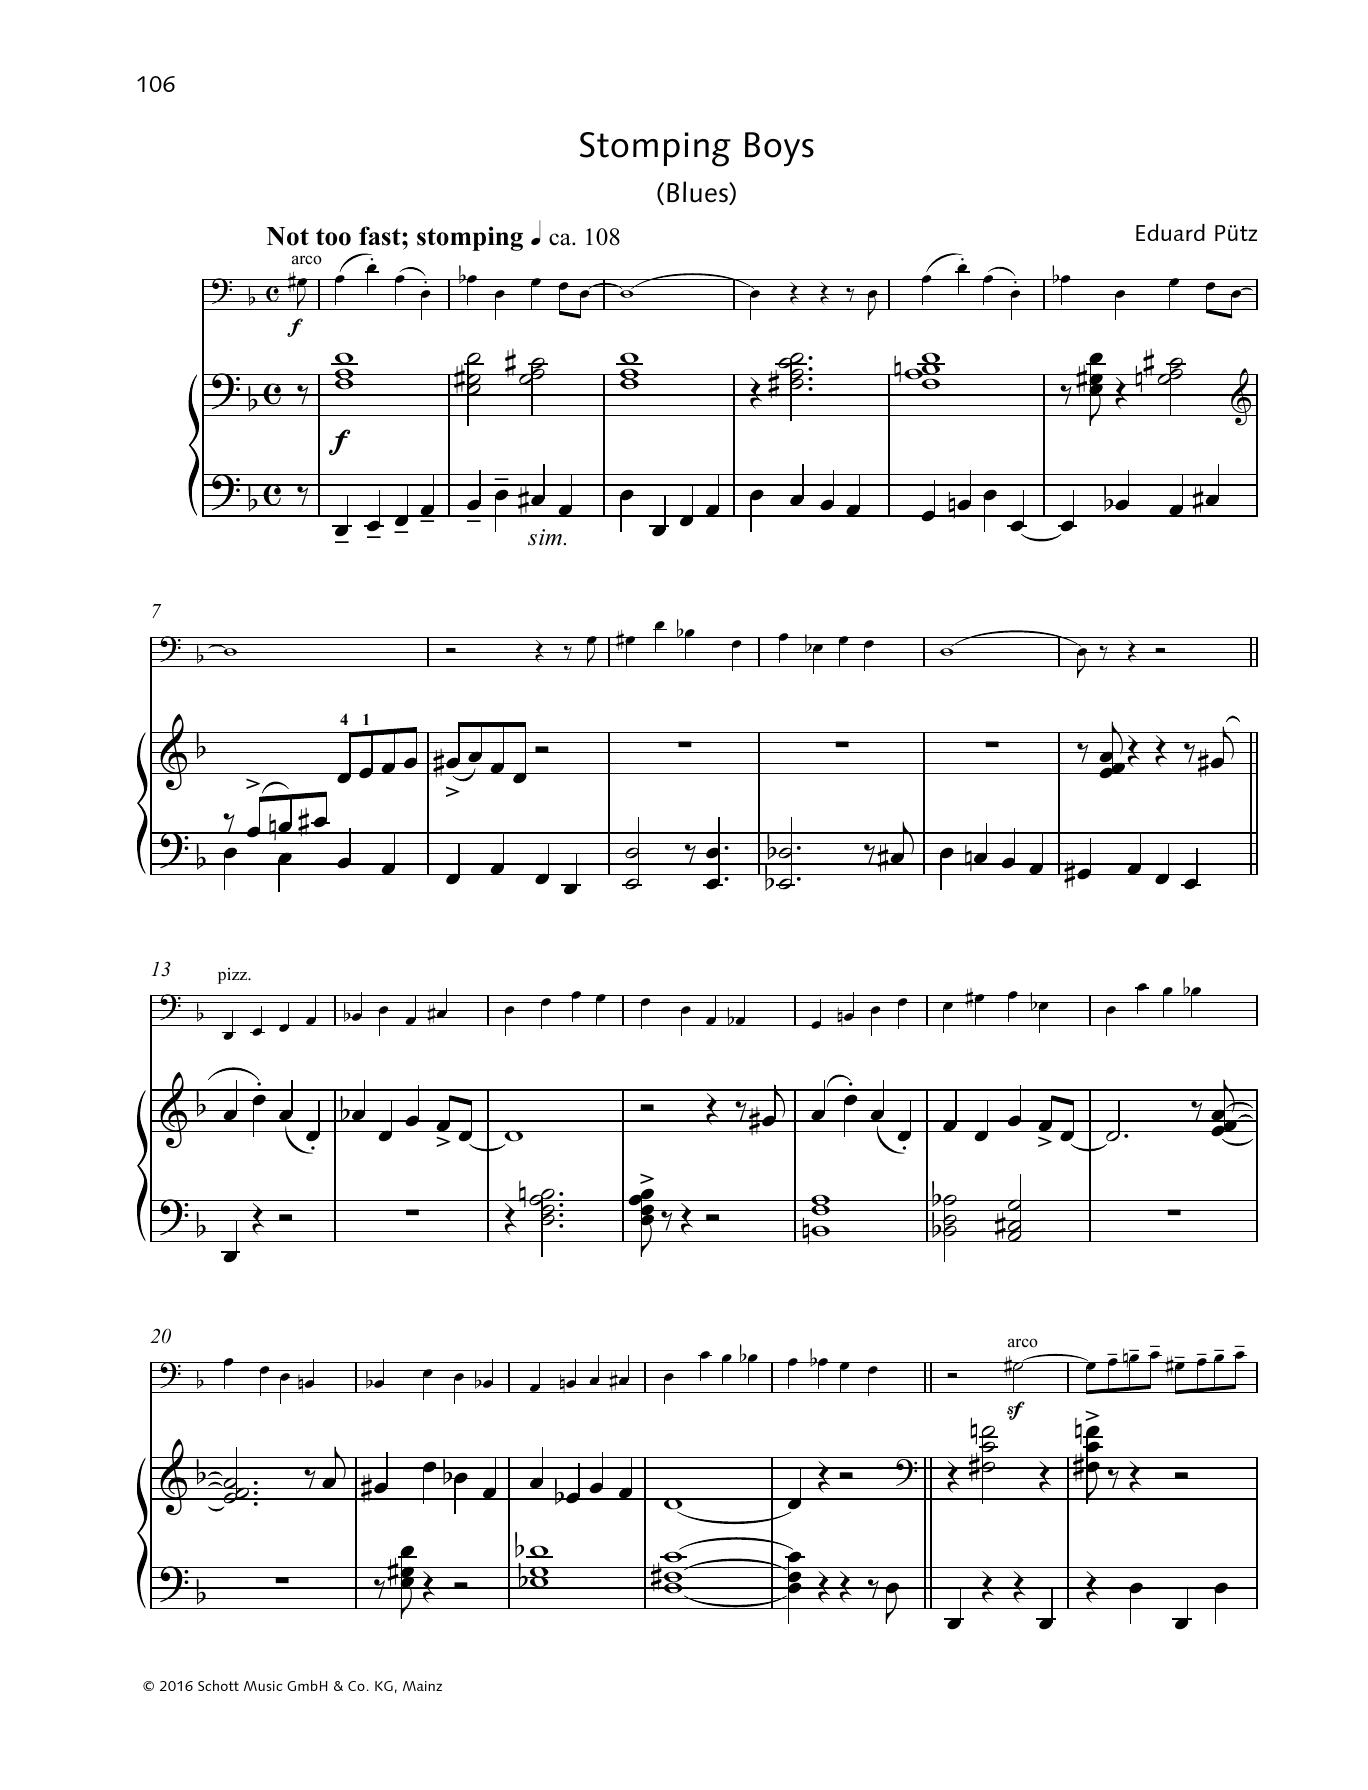 Eduard Pütz Stomping Boys Sheet Music Notes & Chords for String Solo - Download or Print PDF